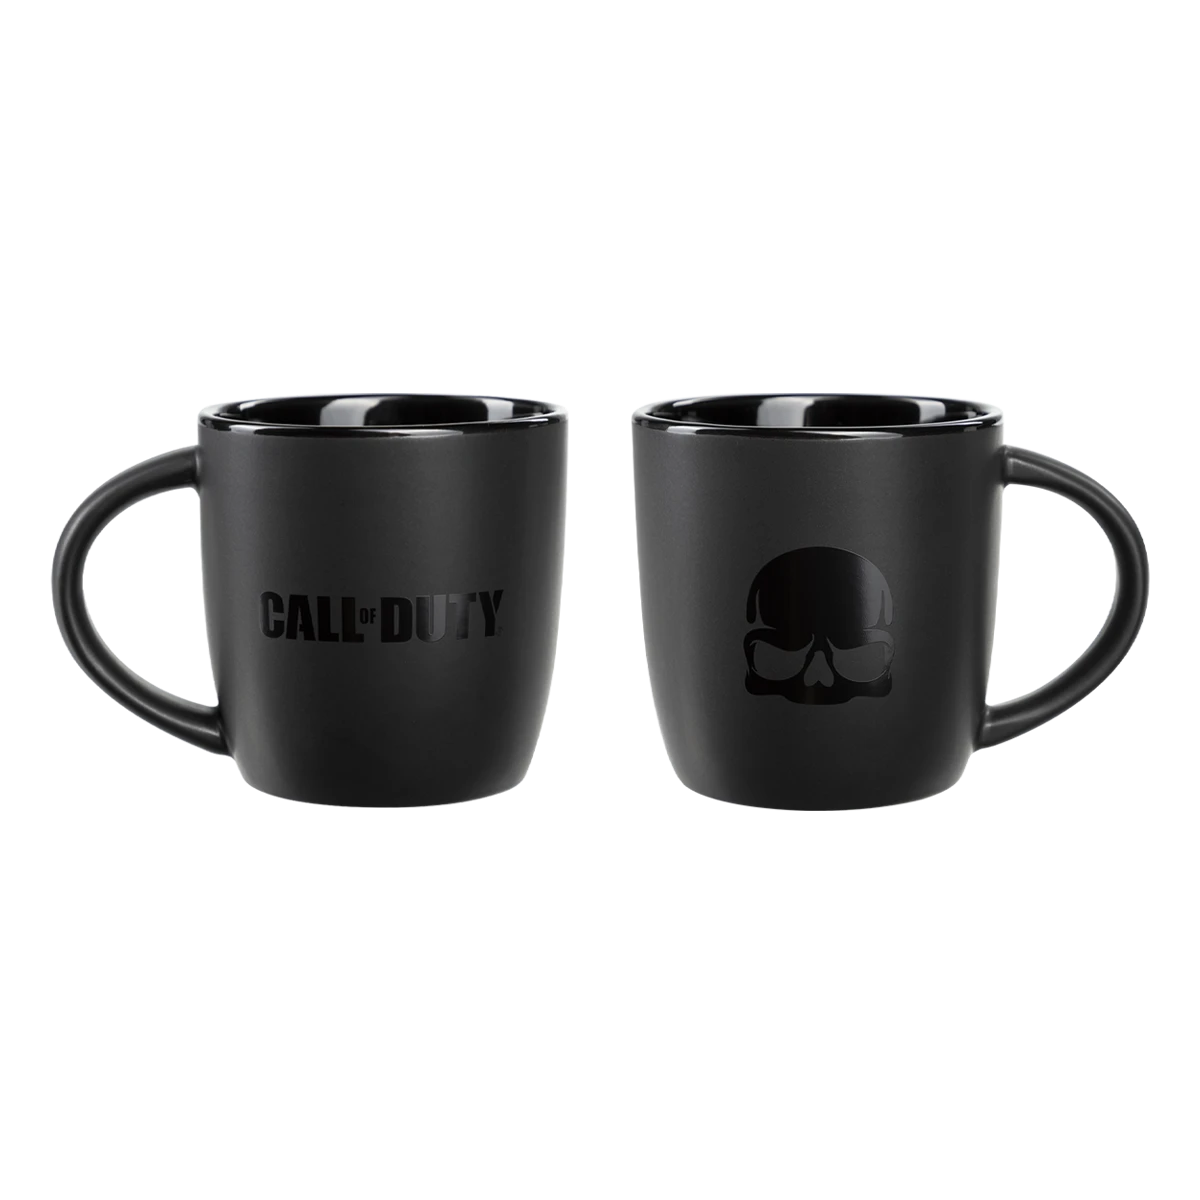 Call of Duty Mug "Stealth" Black